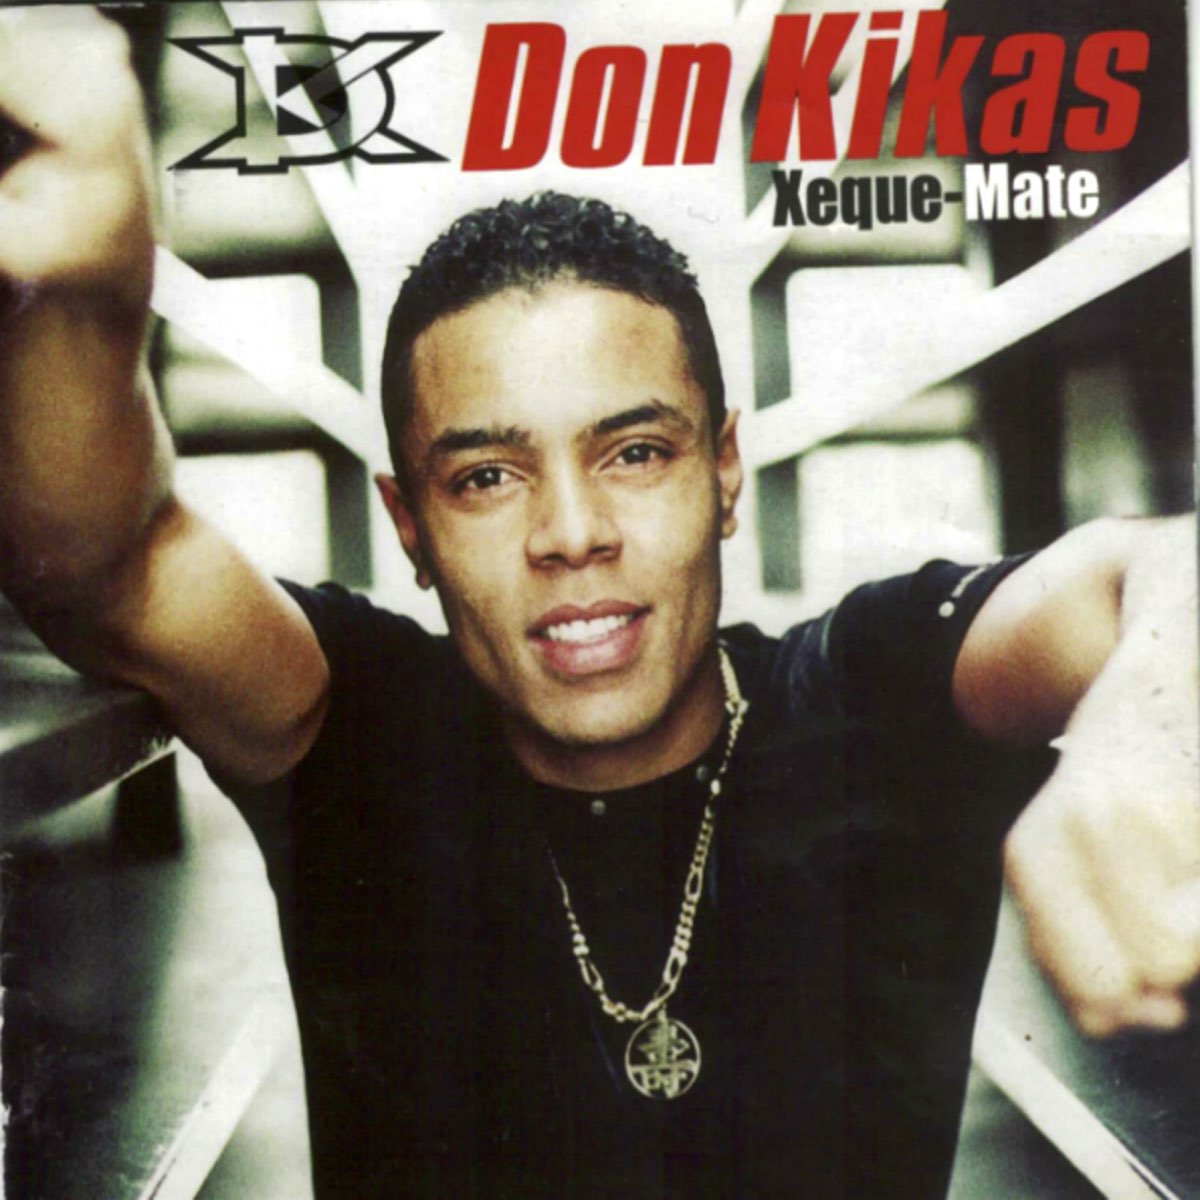 Xeque-Mate - Album by Don Kikas - Apple Music